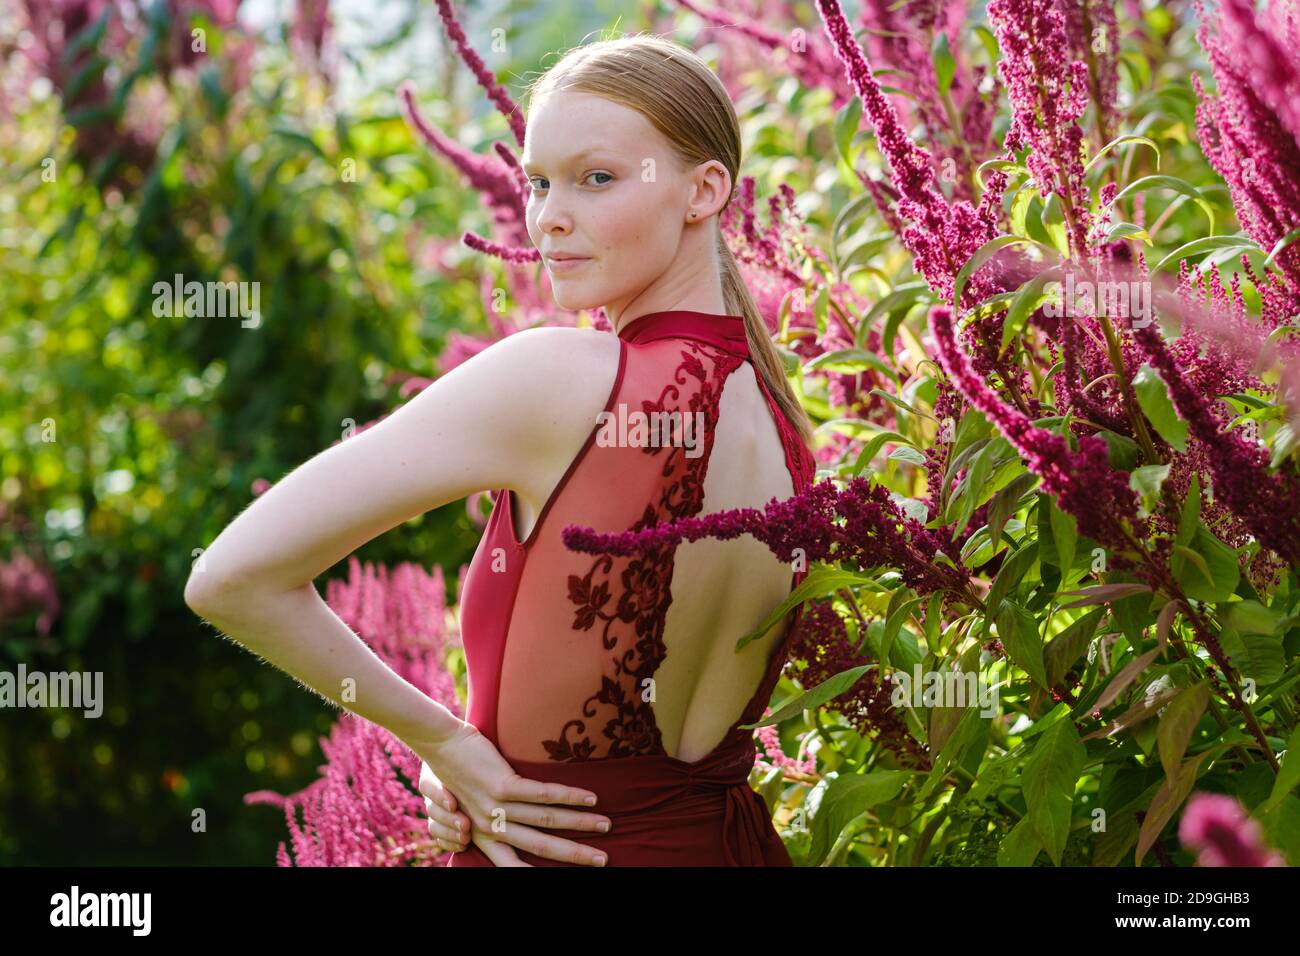 Young Caucasian female ballet dancer posing in burgundy costume Stock Photo